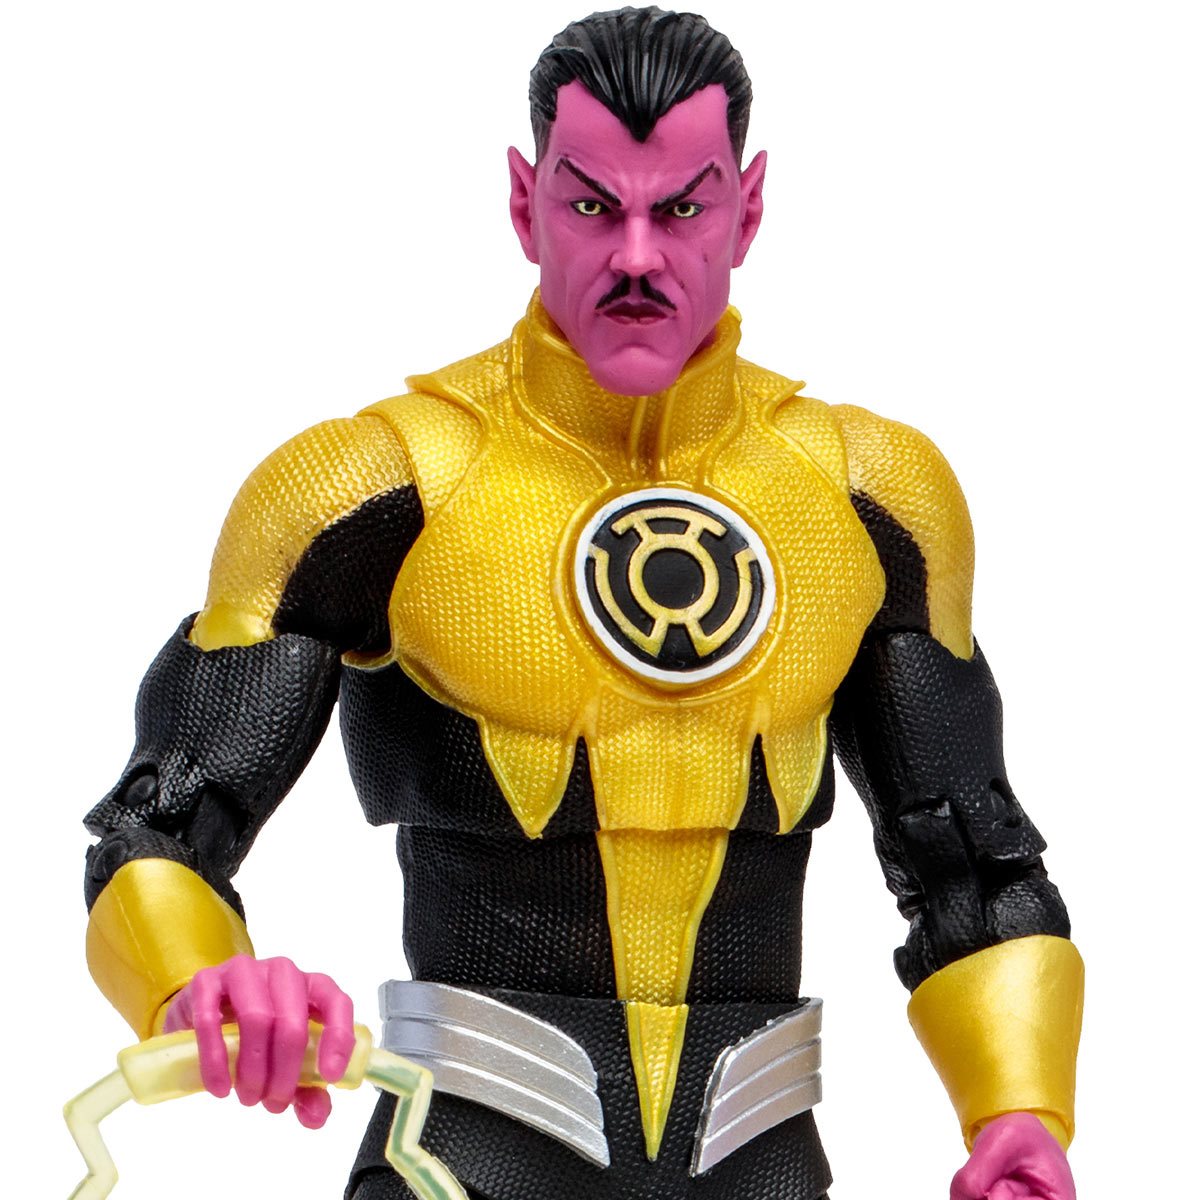 Mcfarlane DC Multiverse: Collector Edition - Sinestro Corps: Sinestro Action Figure